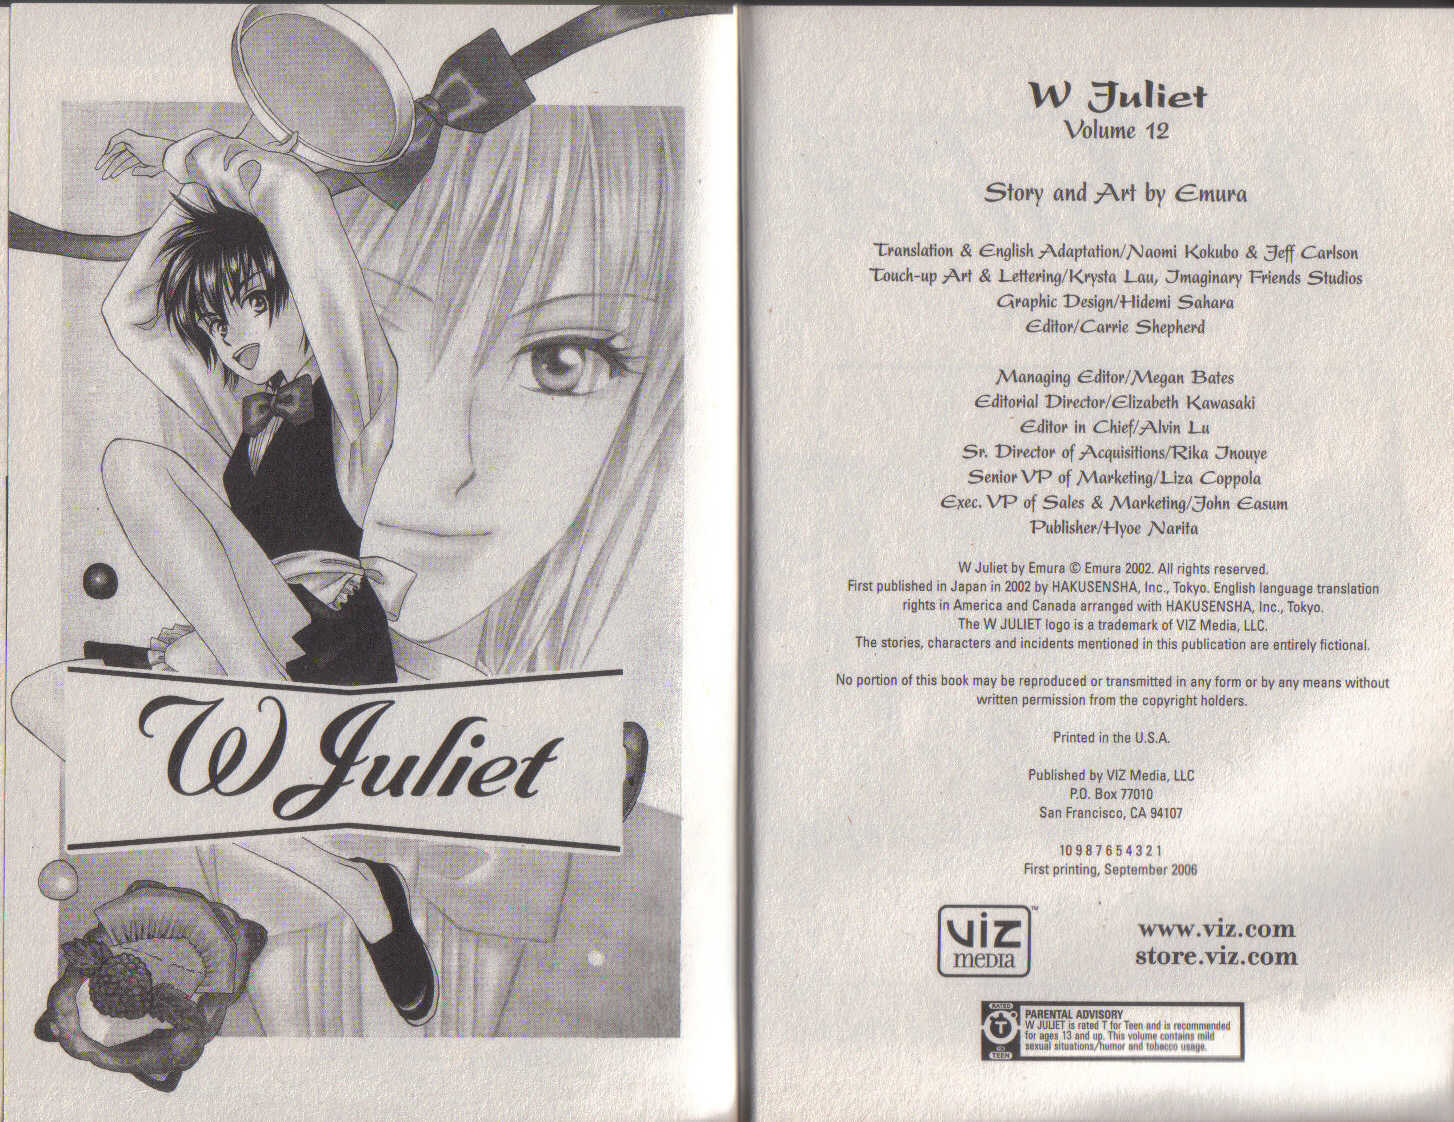 W Juliet 1 v12